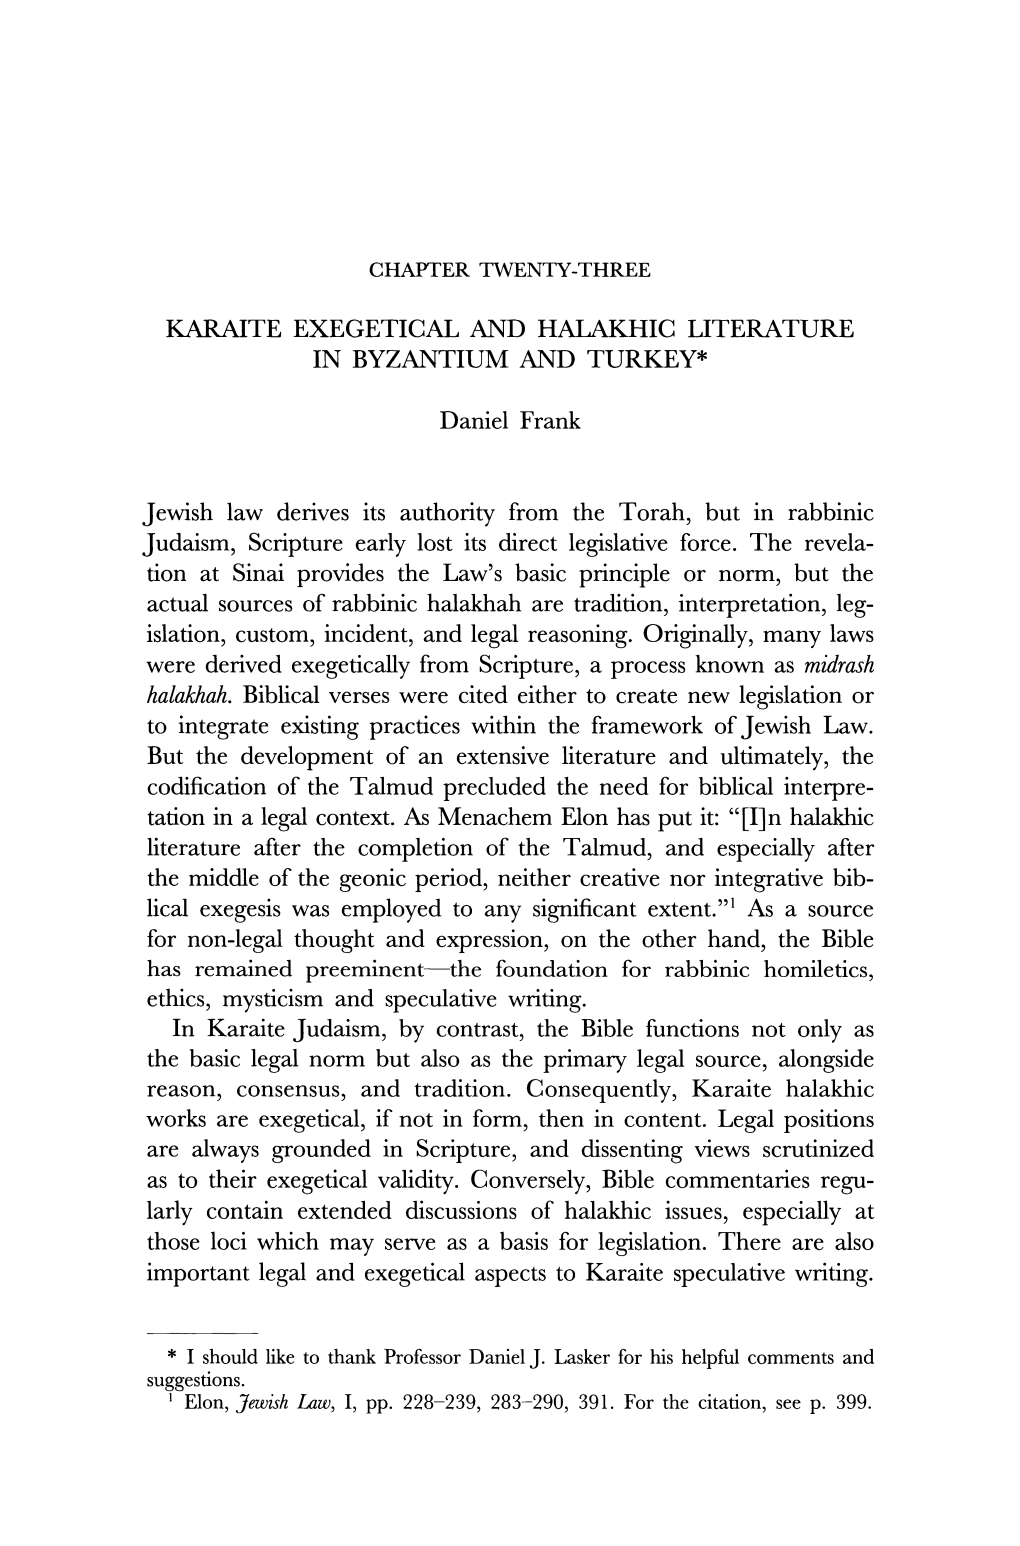 Karaite Exegetical and Halakhic Literature in Byzantium and Turkey*